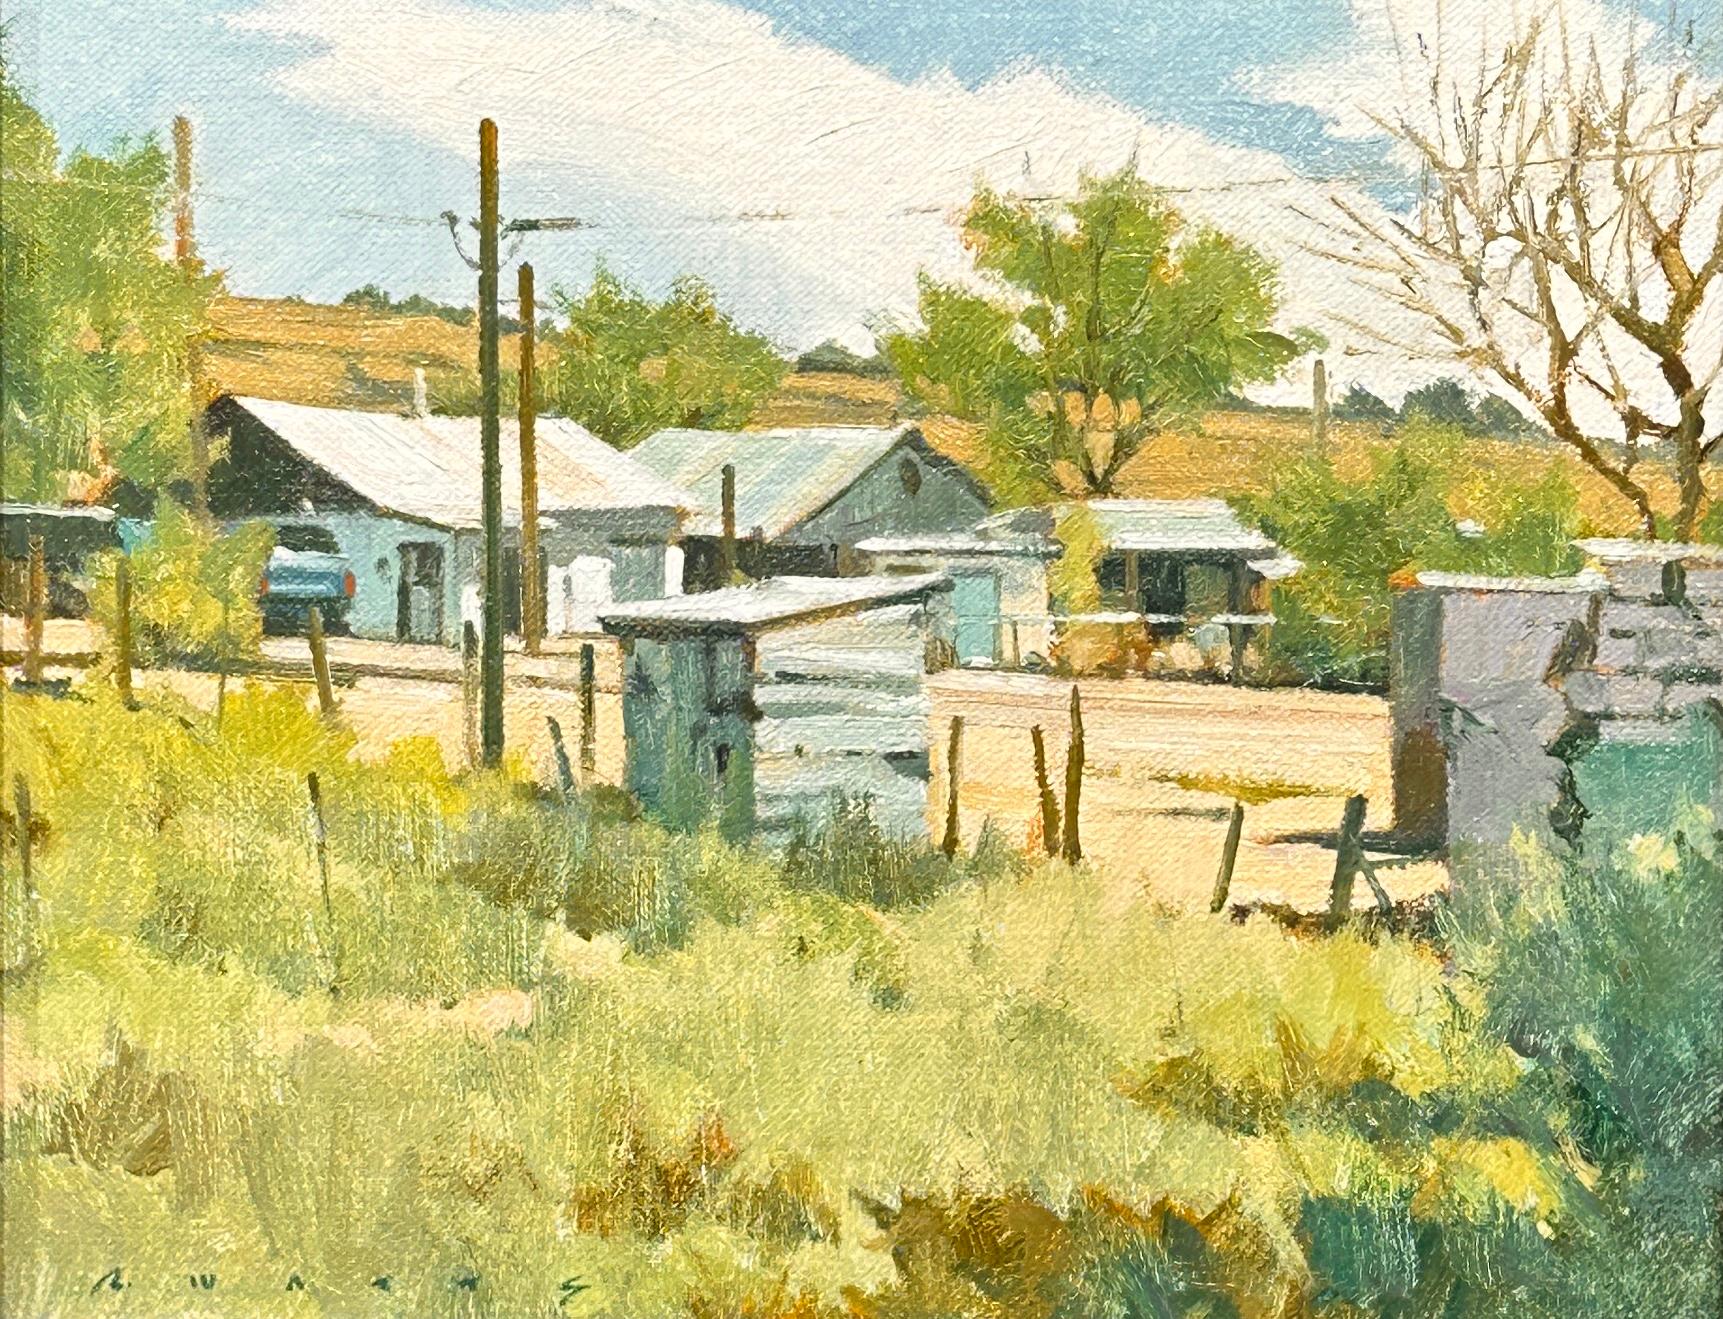 Robert Watts Landscape Painting - "Roadside New Mexico" - Landscape, New Mexico by renowned painter